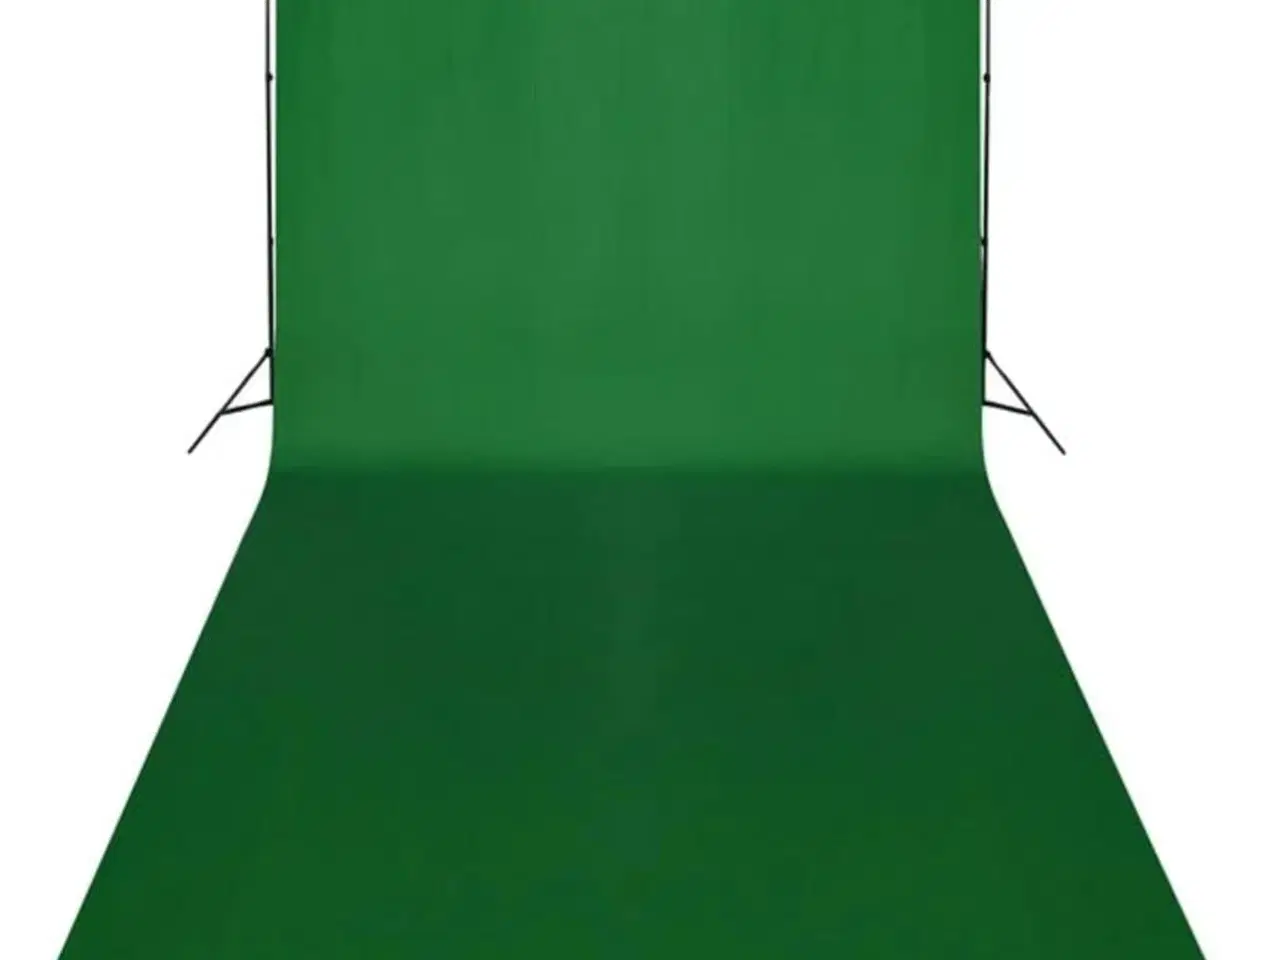 Billede 2 - Fotobaggrund i bomuld grøn 600 x 300 cm chroma key